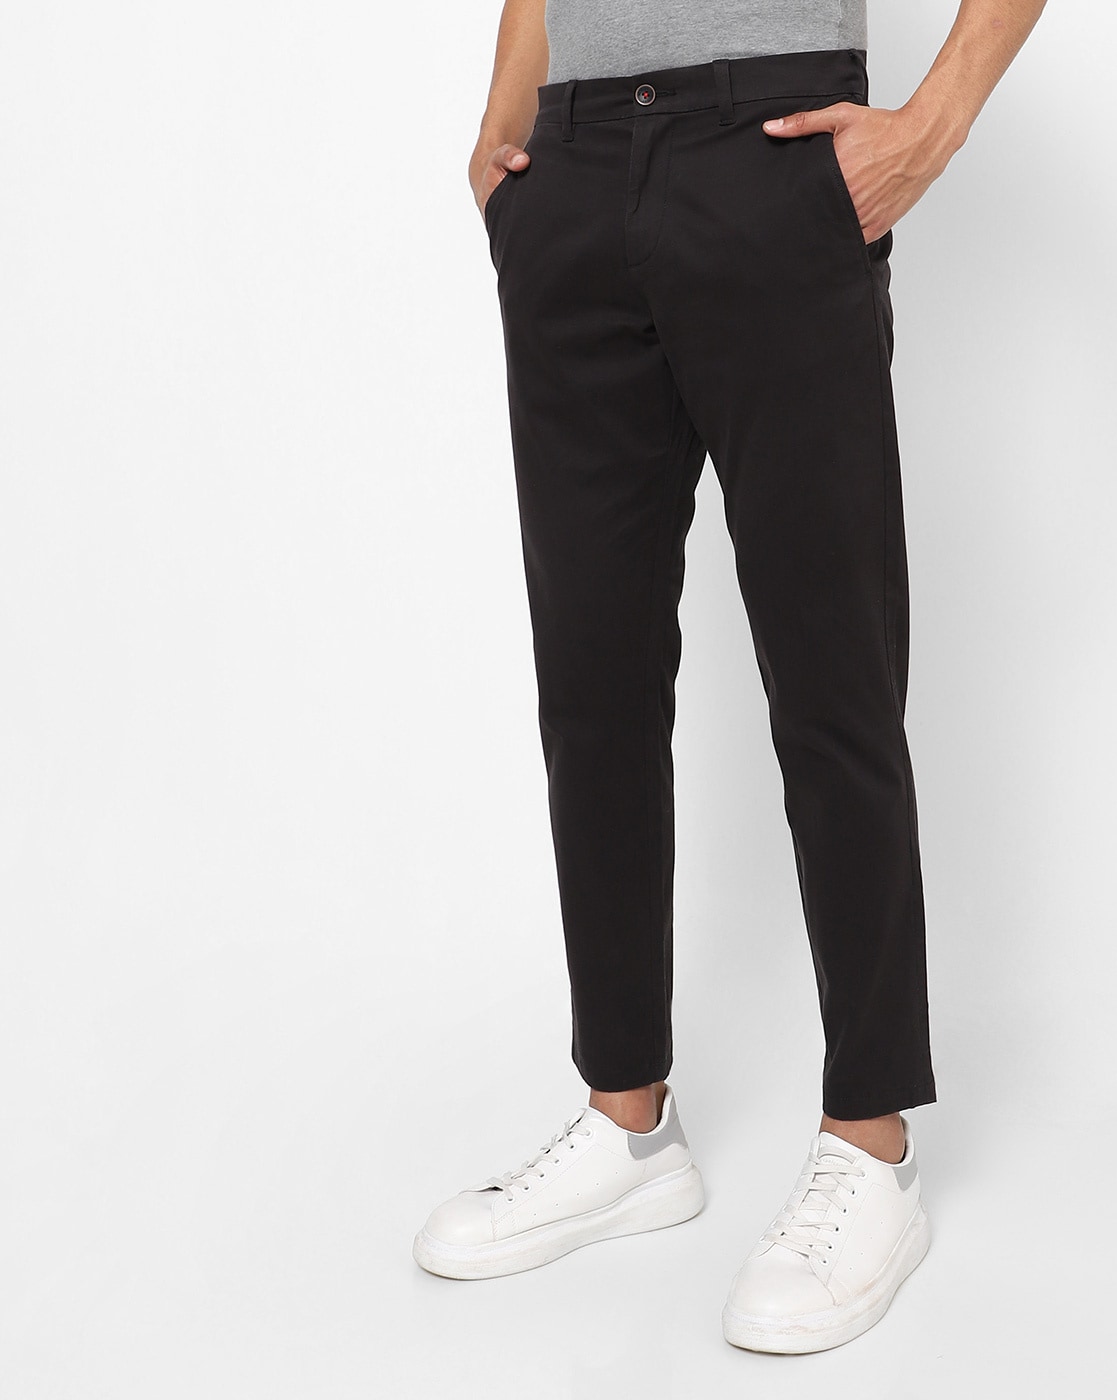 Kiels MidRise Slim Fit Cropped Trousers Black  ALLSAINTS